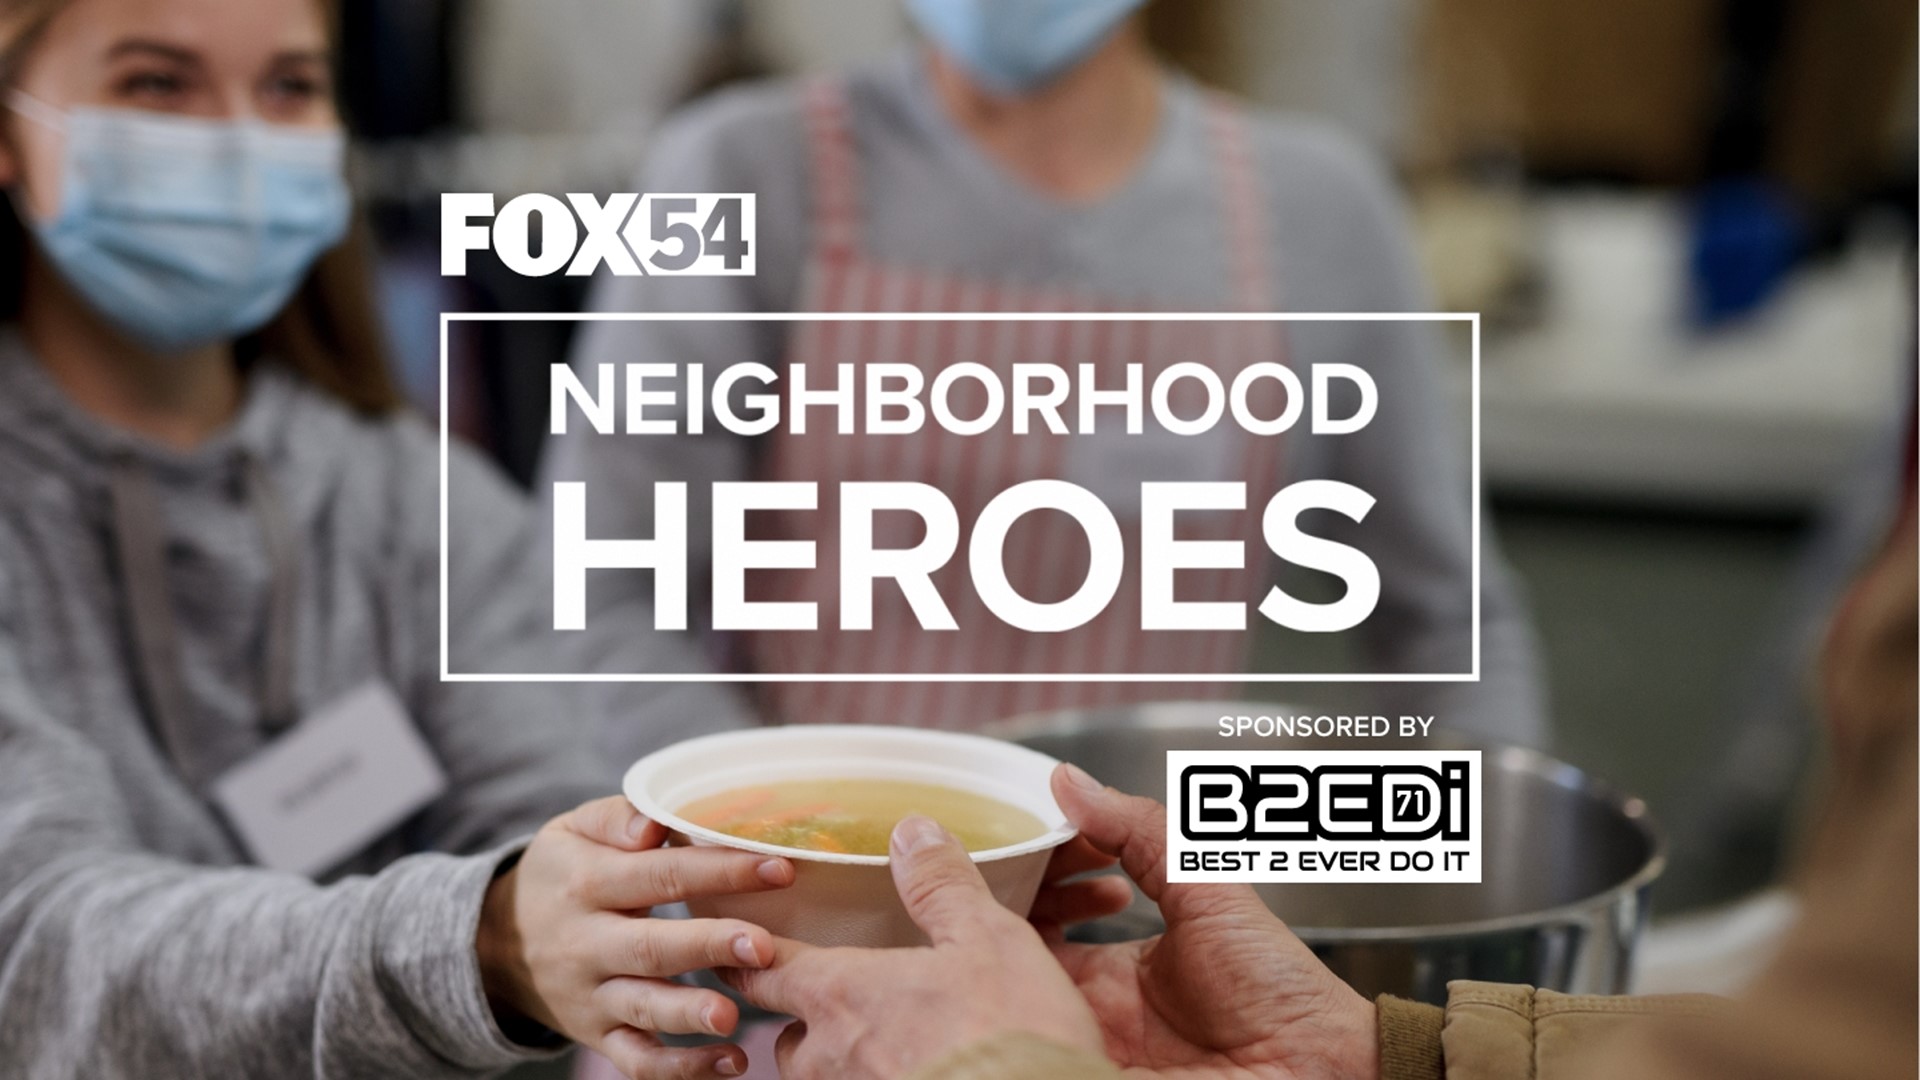 Meet our FOX54 News B2EDI Neighborhood Heroes.